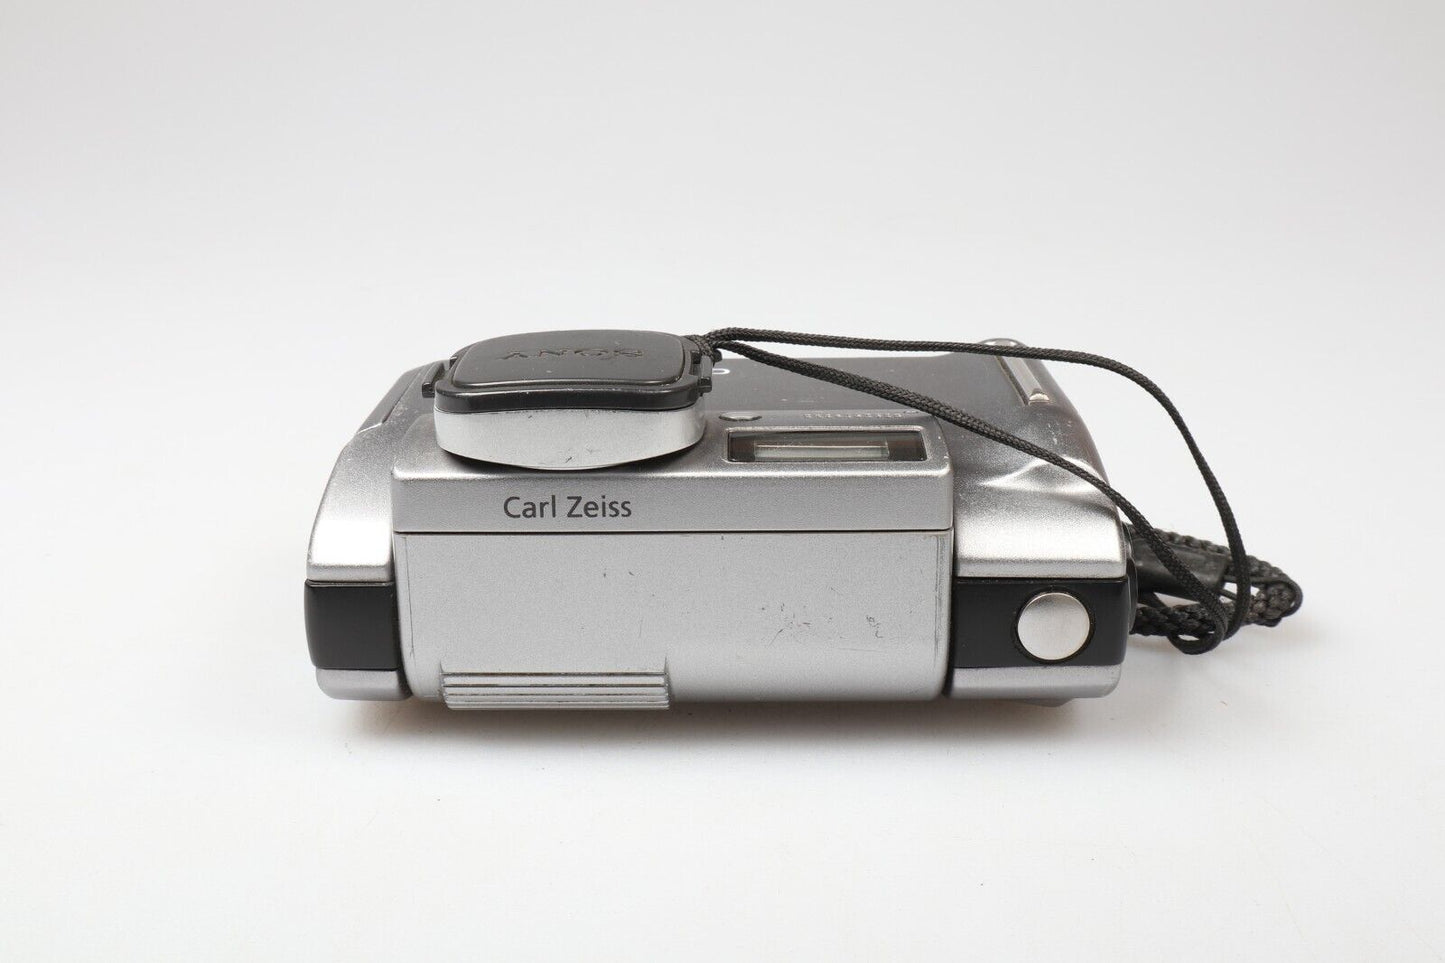 Sony Cybershot DSC-F55E | Digital Compact Camera | 2.1MP | Silver